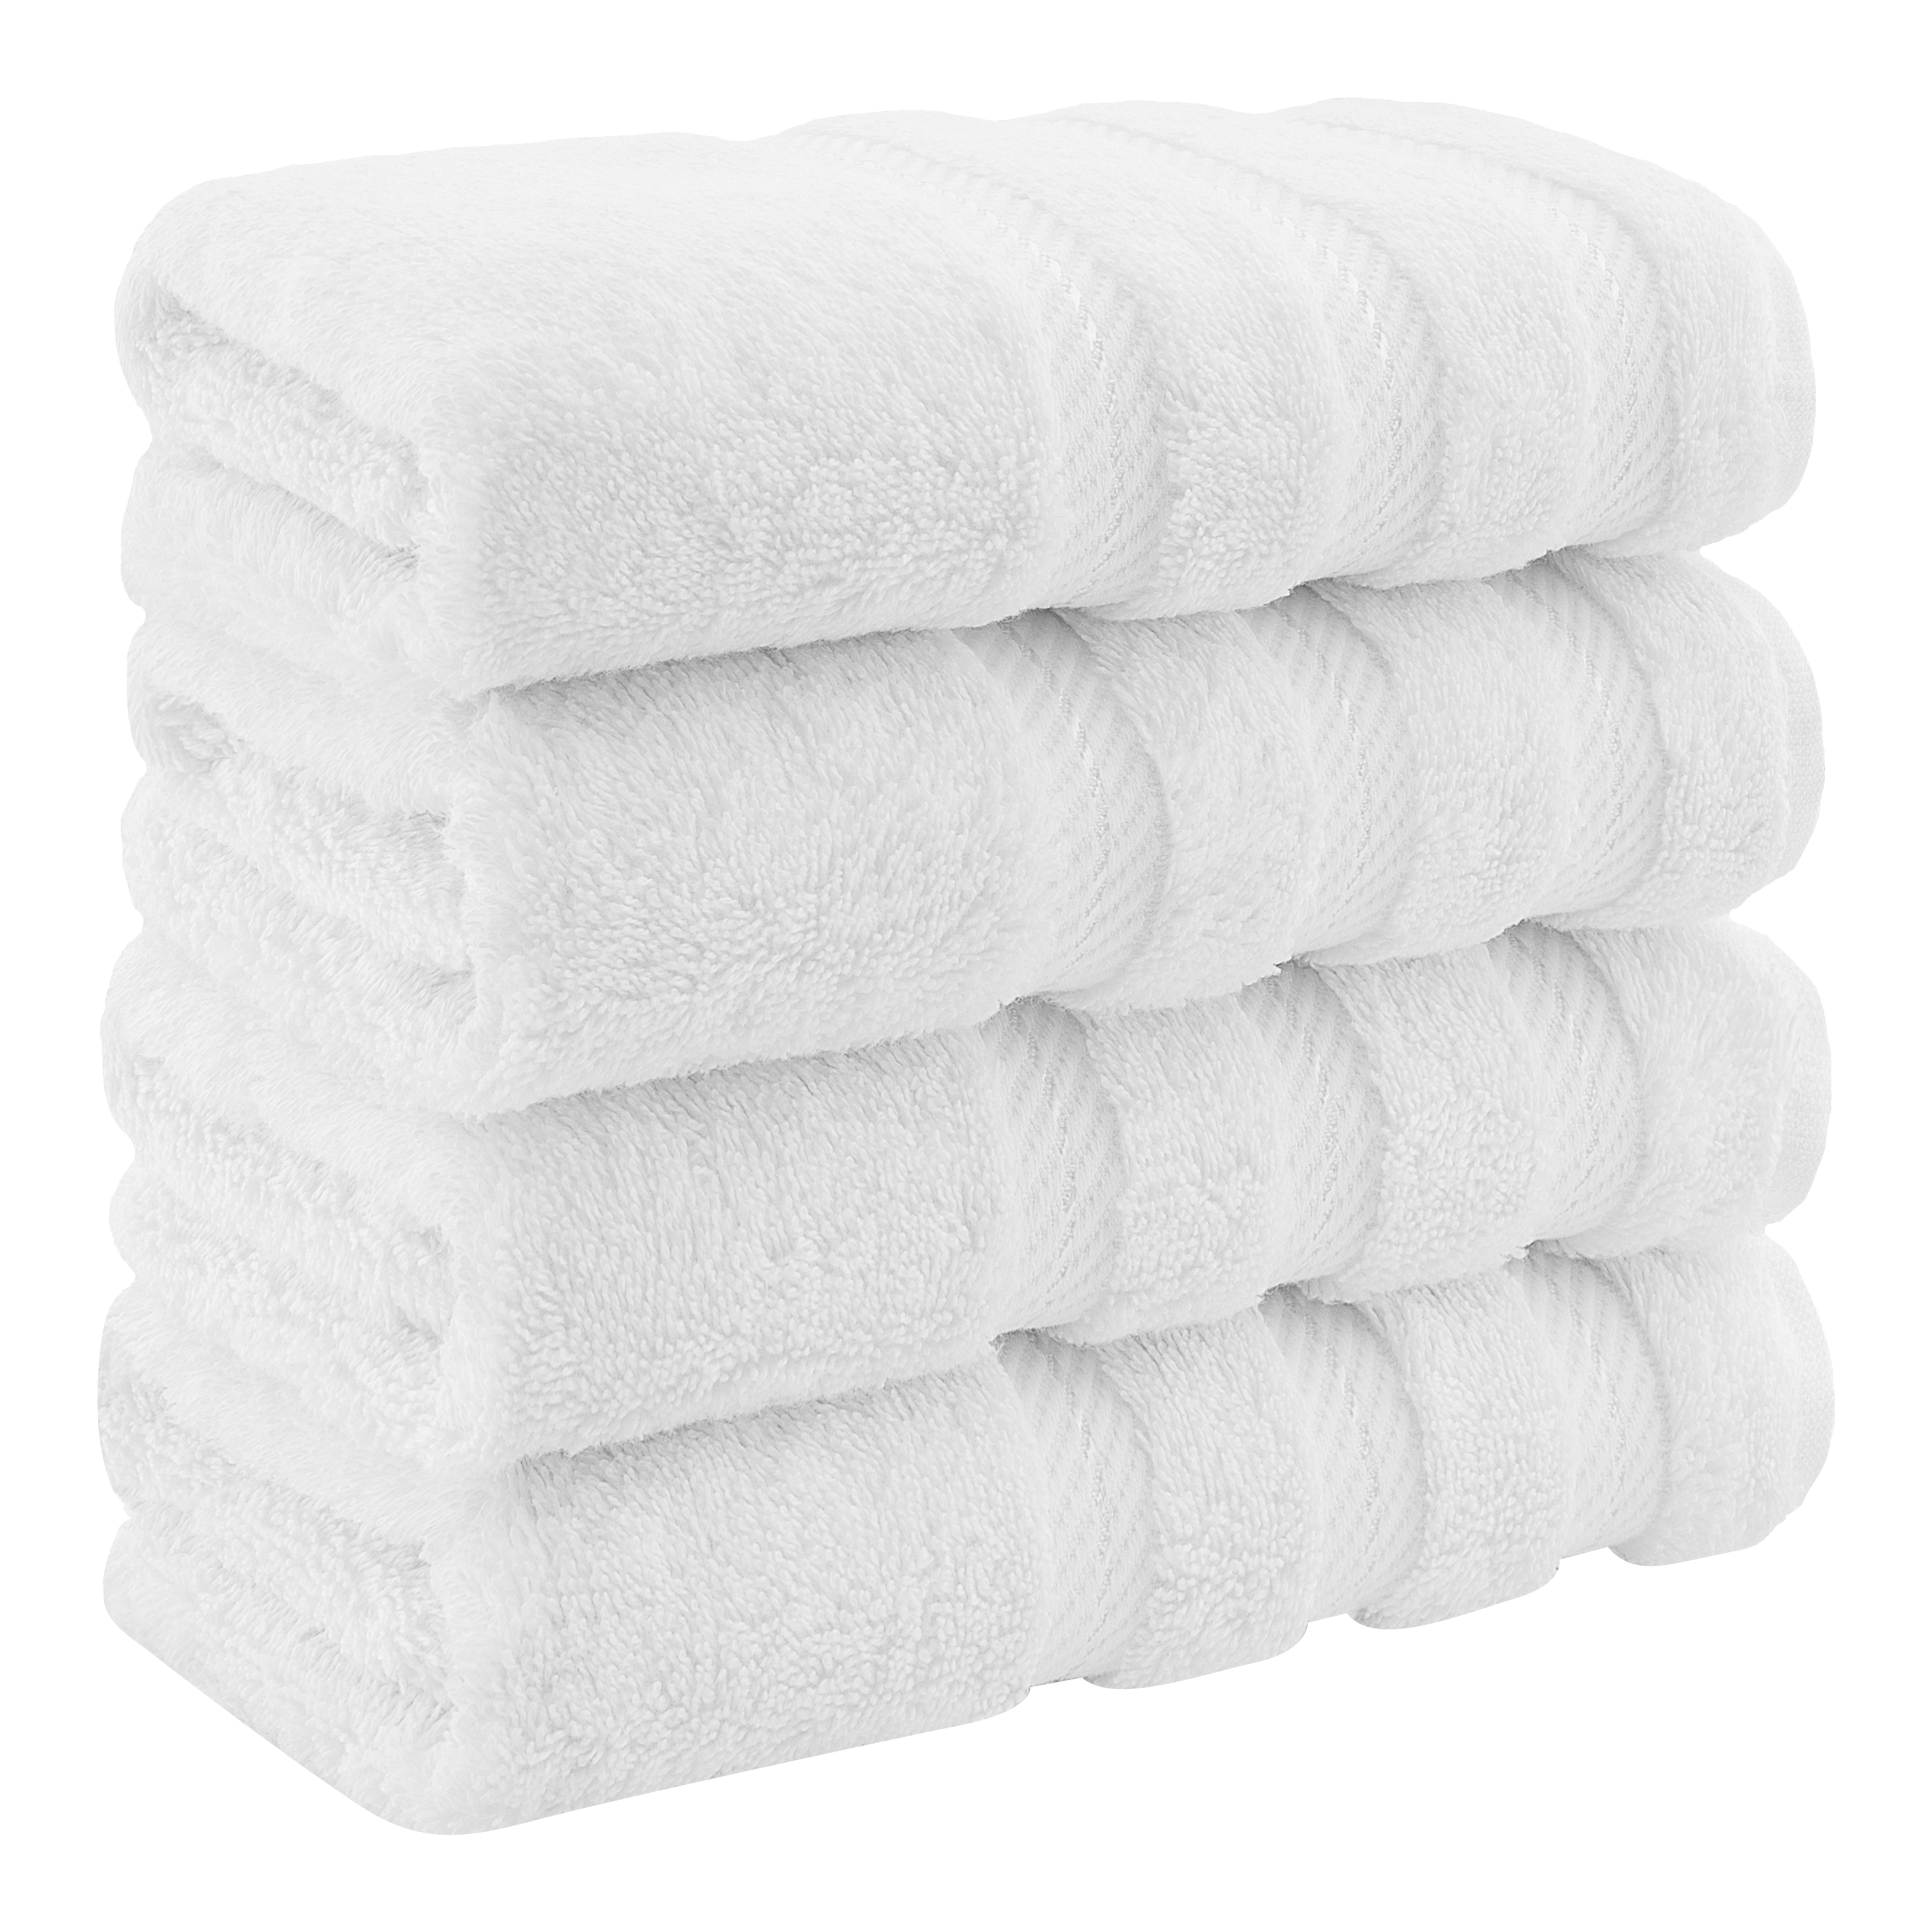 Soft Linen Dish Towel, Blue Stripe Assortment